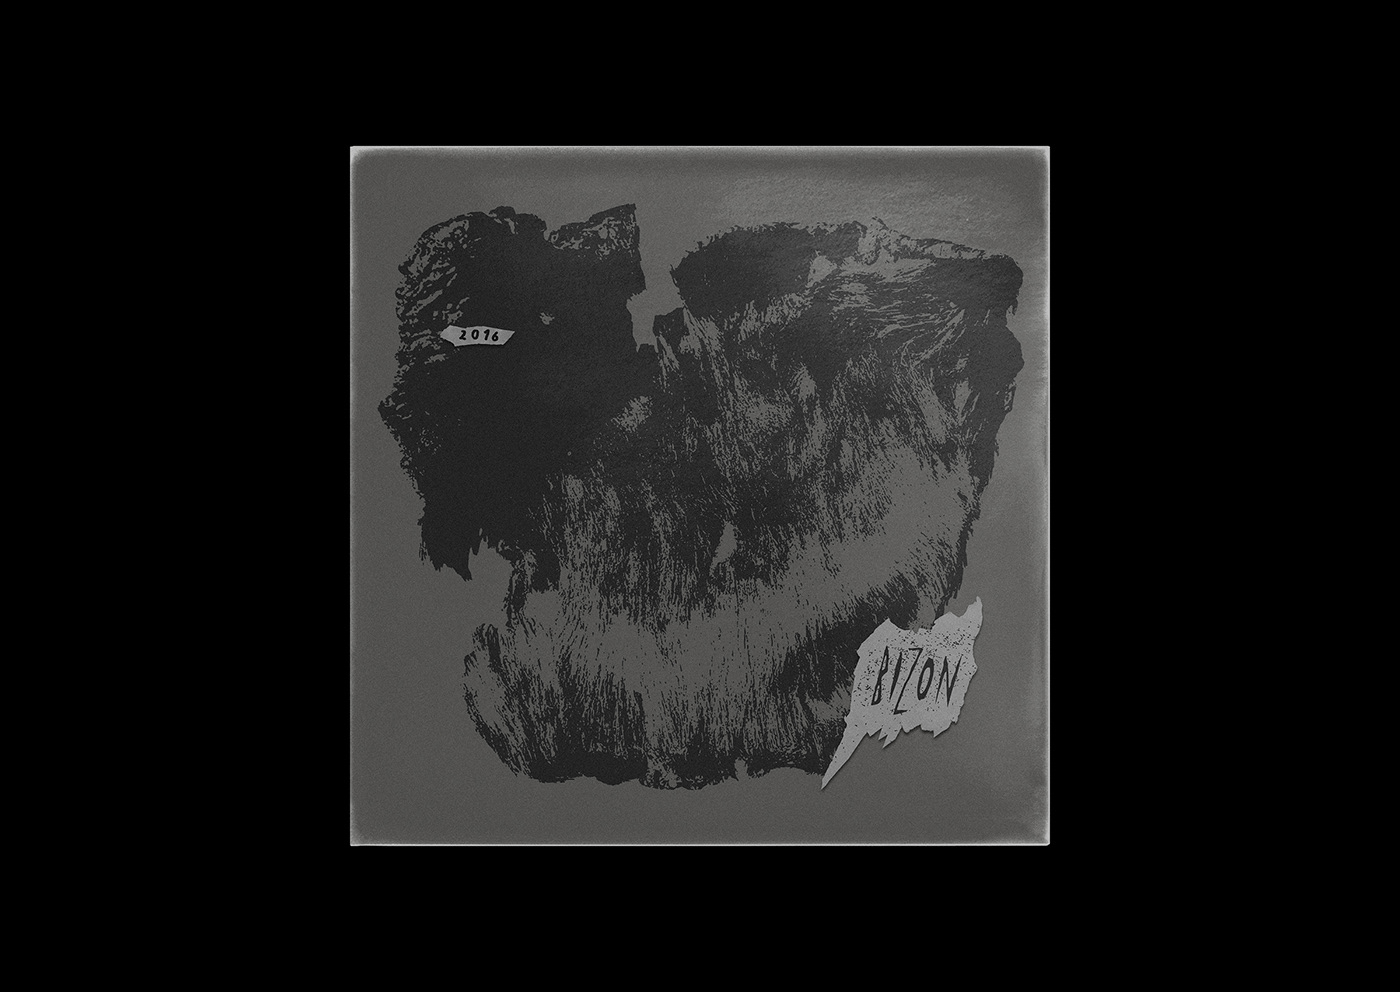 Adobe Portfolio bizon band rock Album cover vinyl animal black invert line dot texture Croatia Love